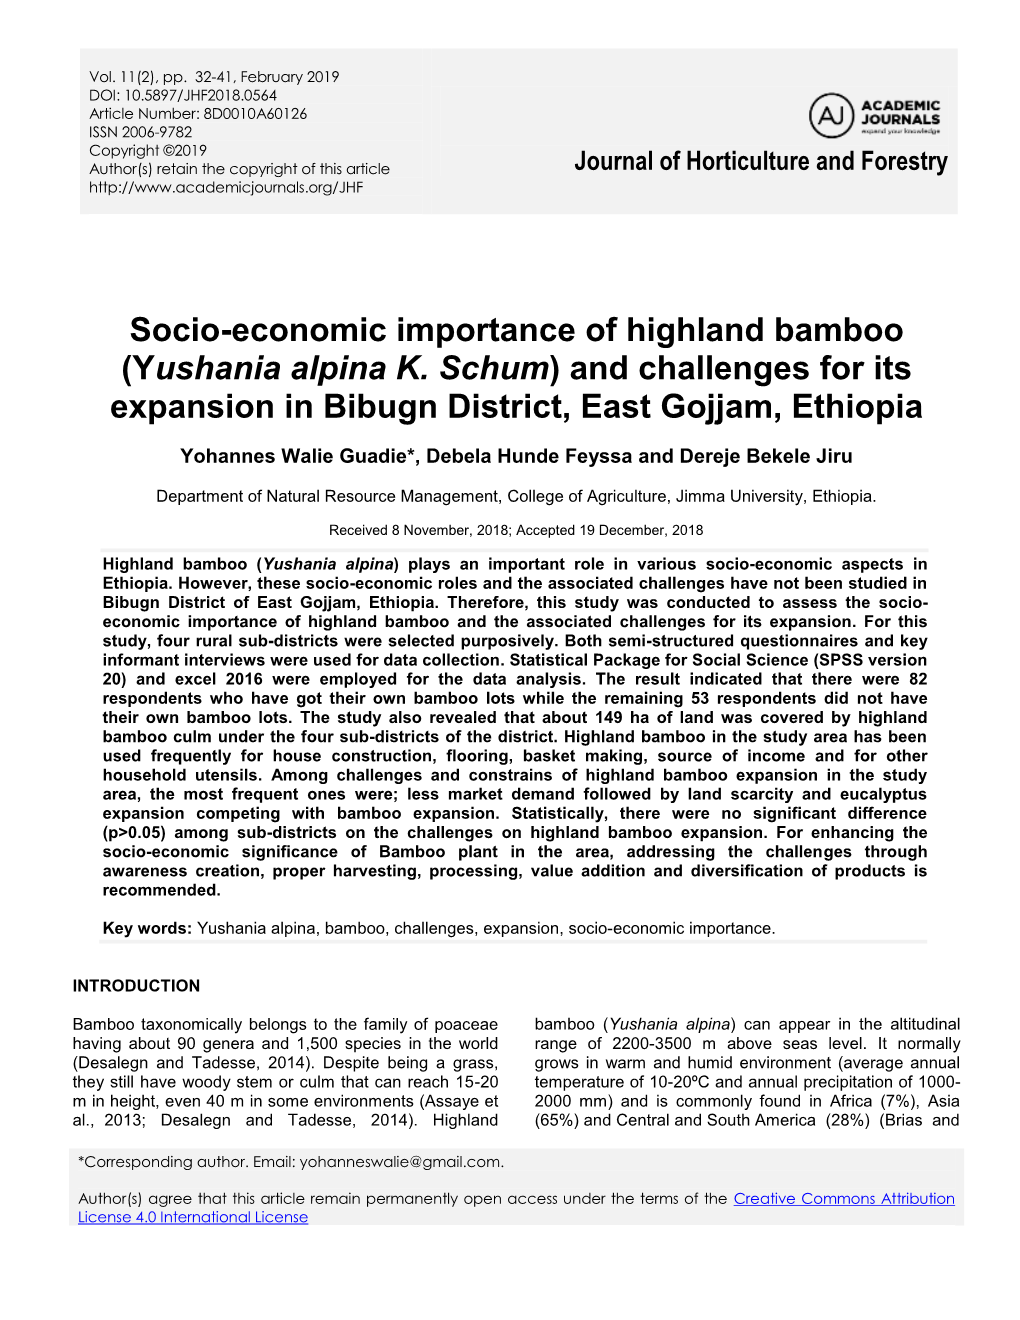 Socio-Economic Importance of Highland Bamboo (Yushania Alpina K